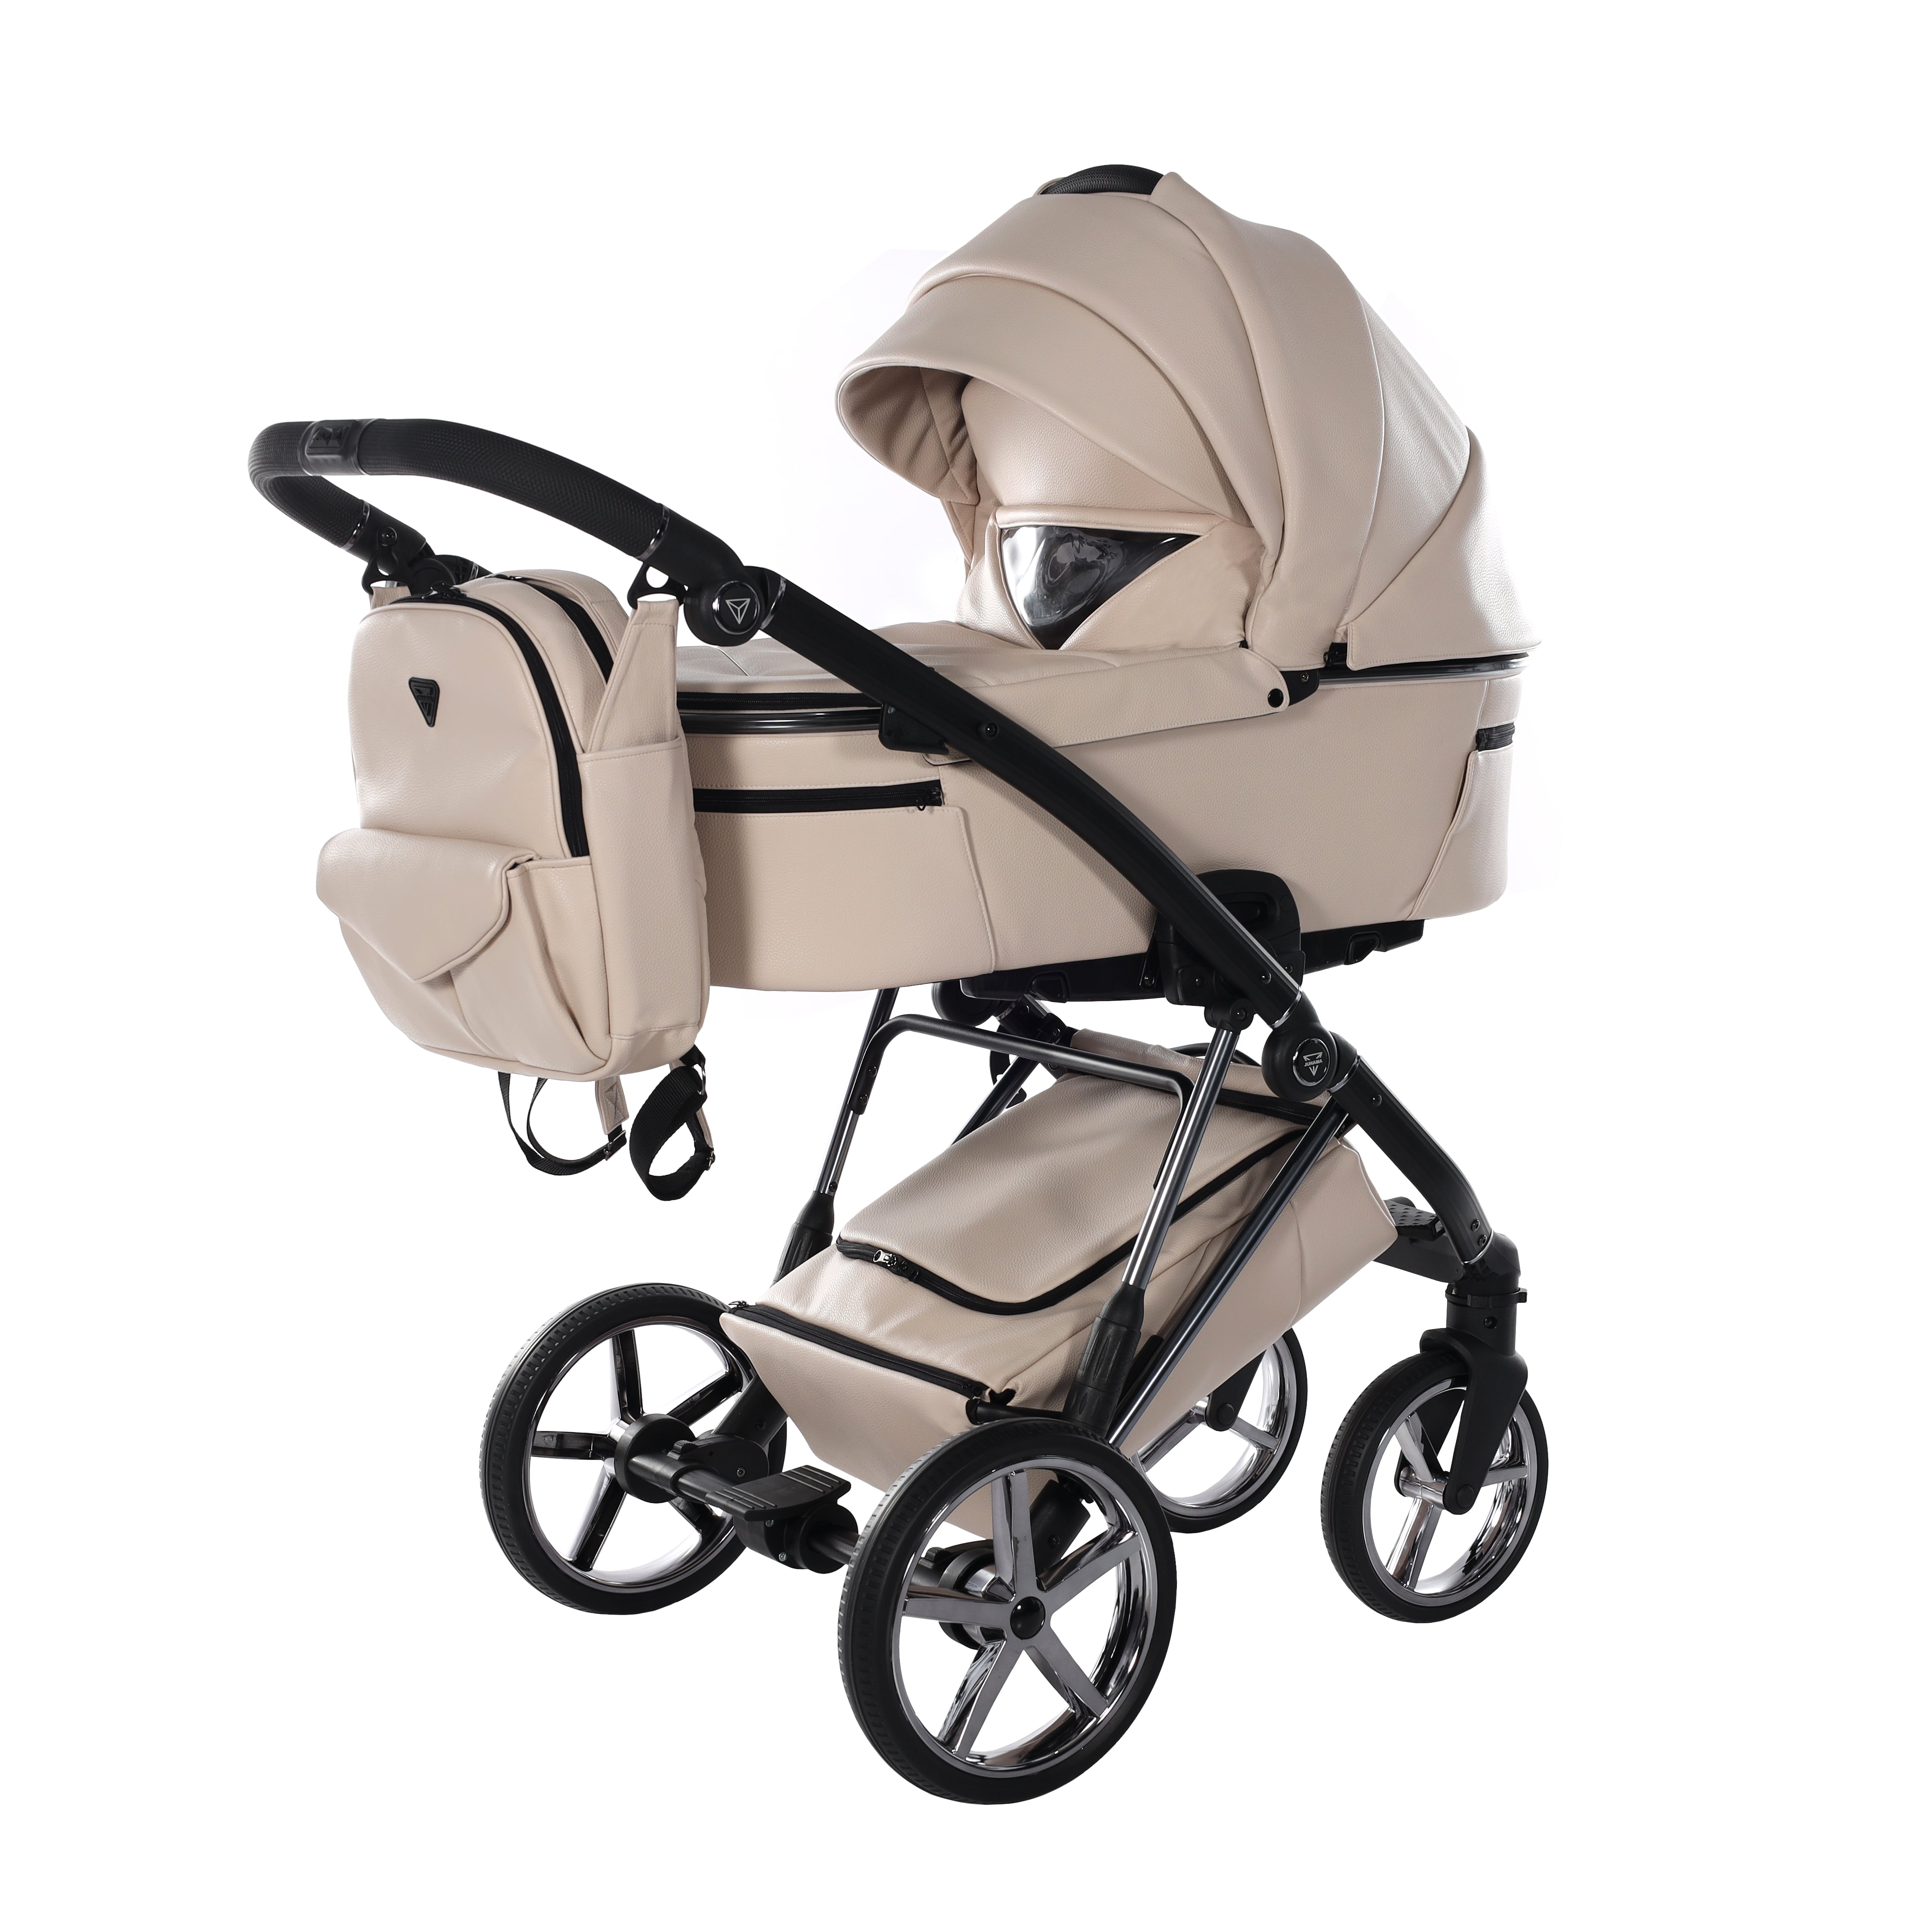 Junama AIR Premium V3, baby stroller and bassinet 2 in 1 - BEIGE, Code number: JUNAIRP02